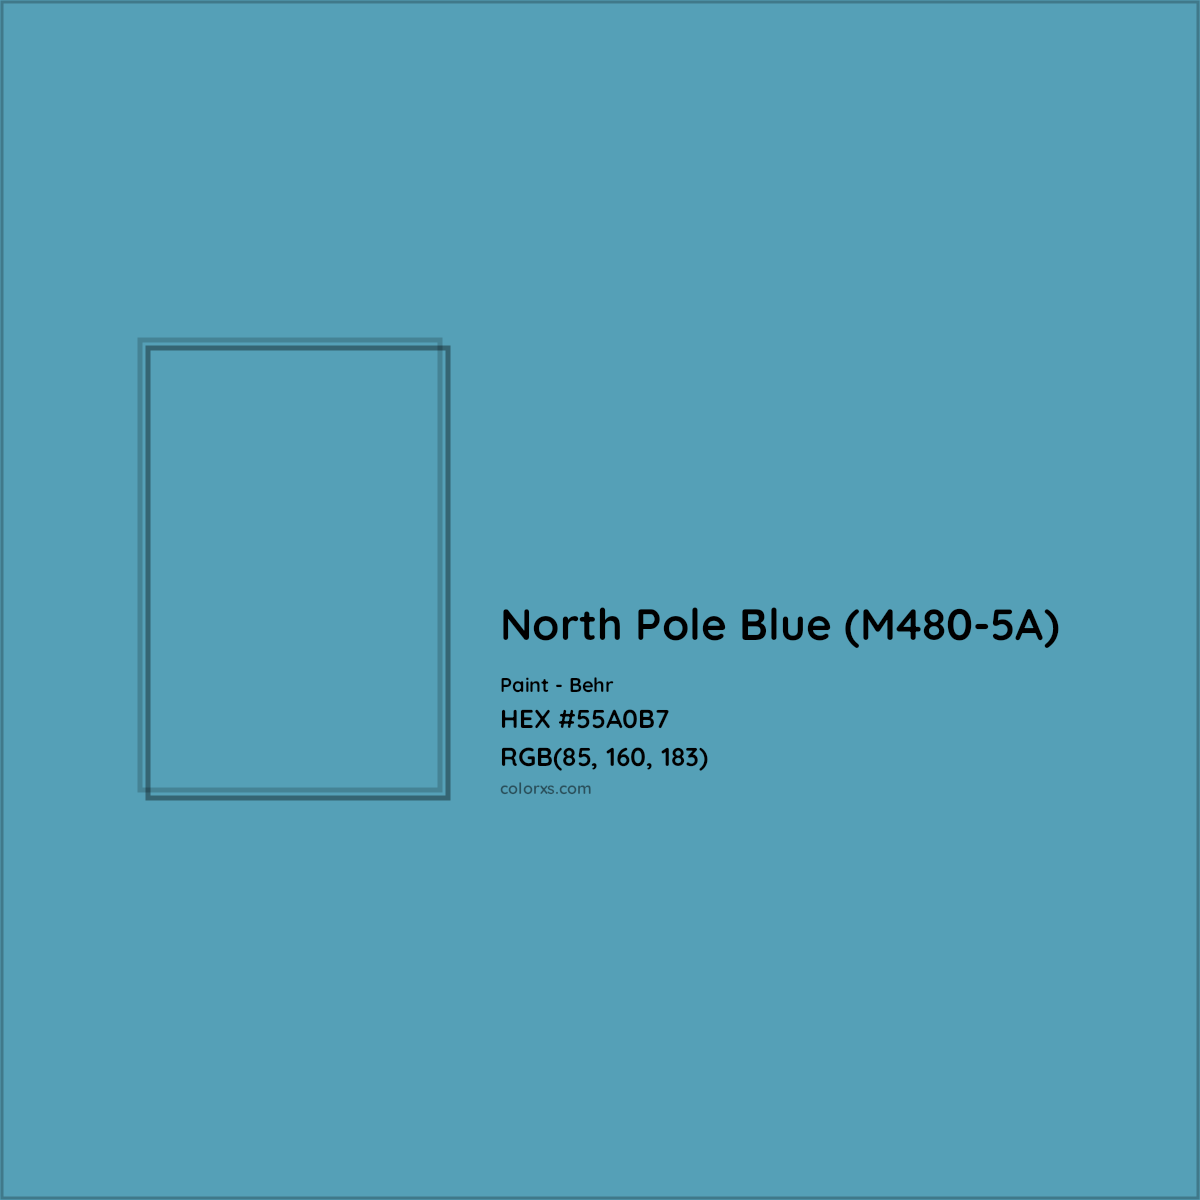 HEX #55A0B7 North Pole Blue (M480-5A) Paint Behr - Color Code